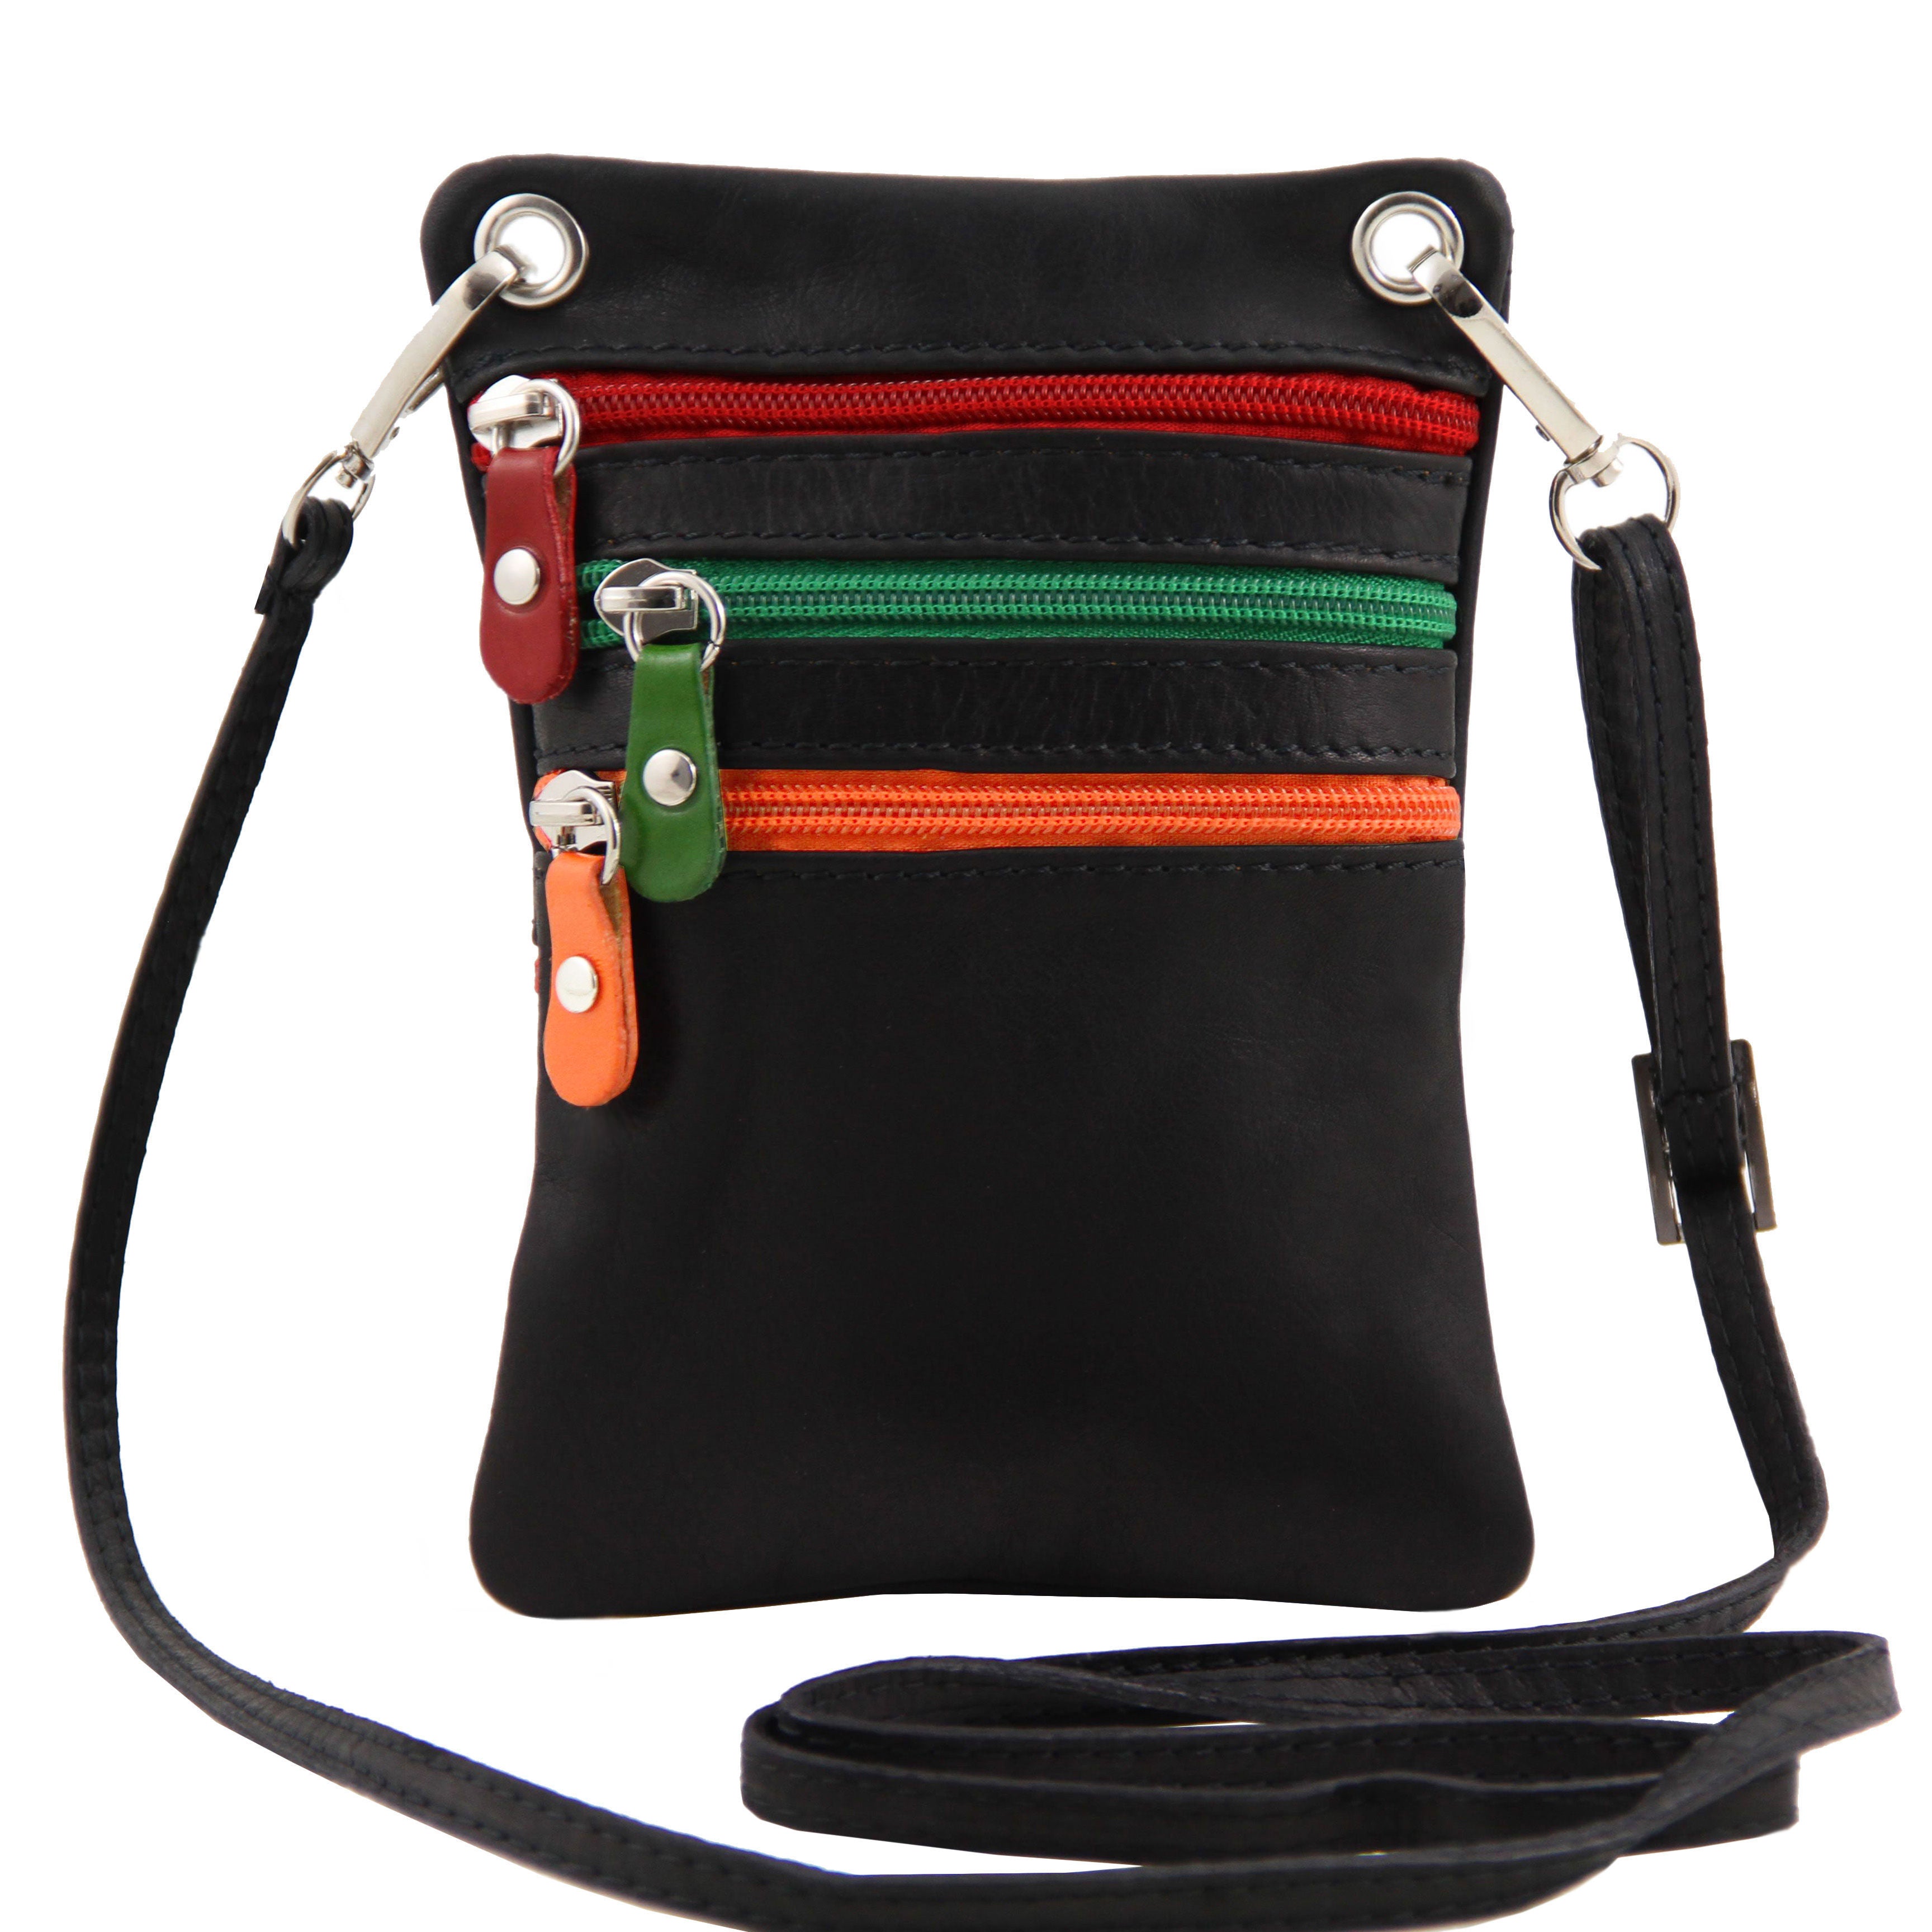 Tuscany Leather crossbody tas TL Bag zwart